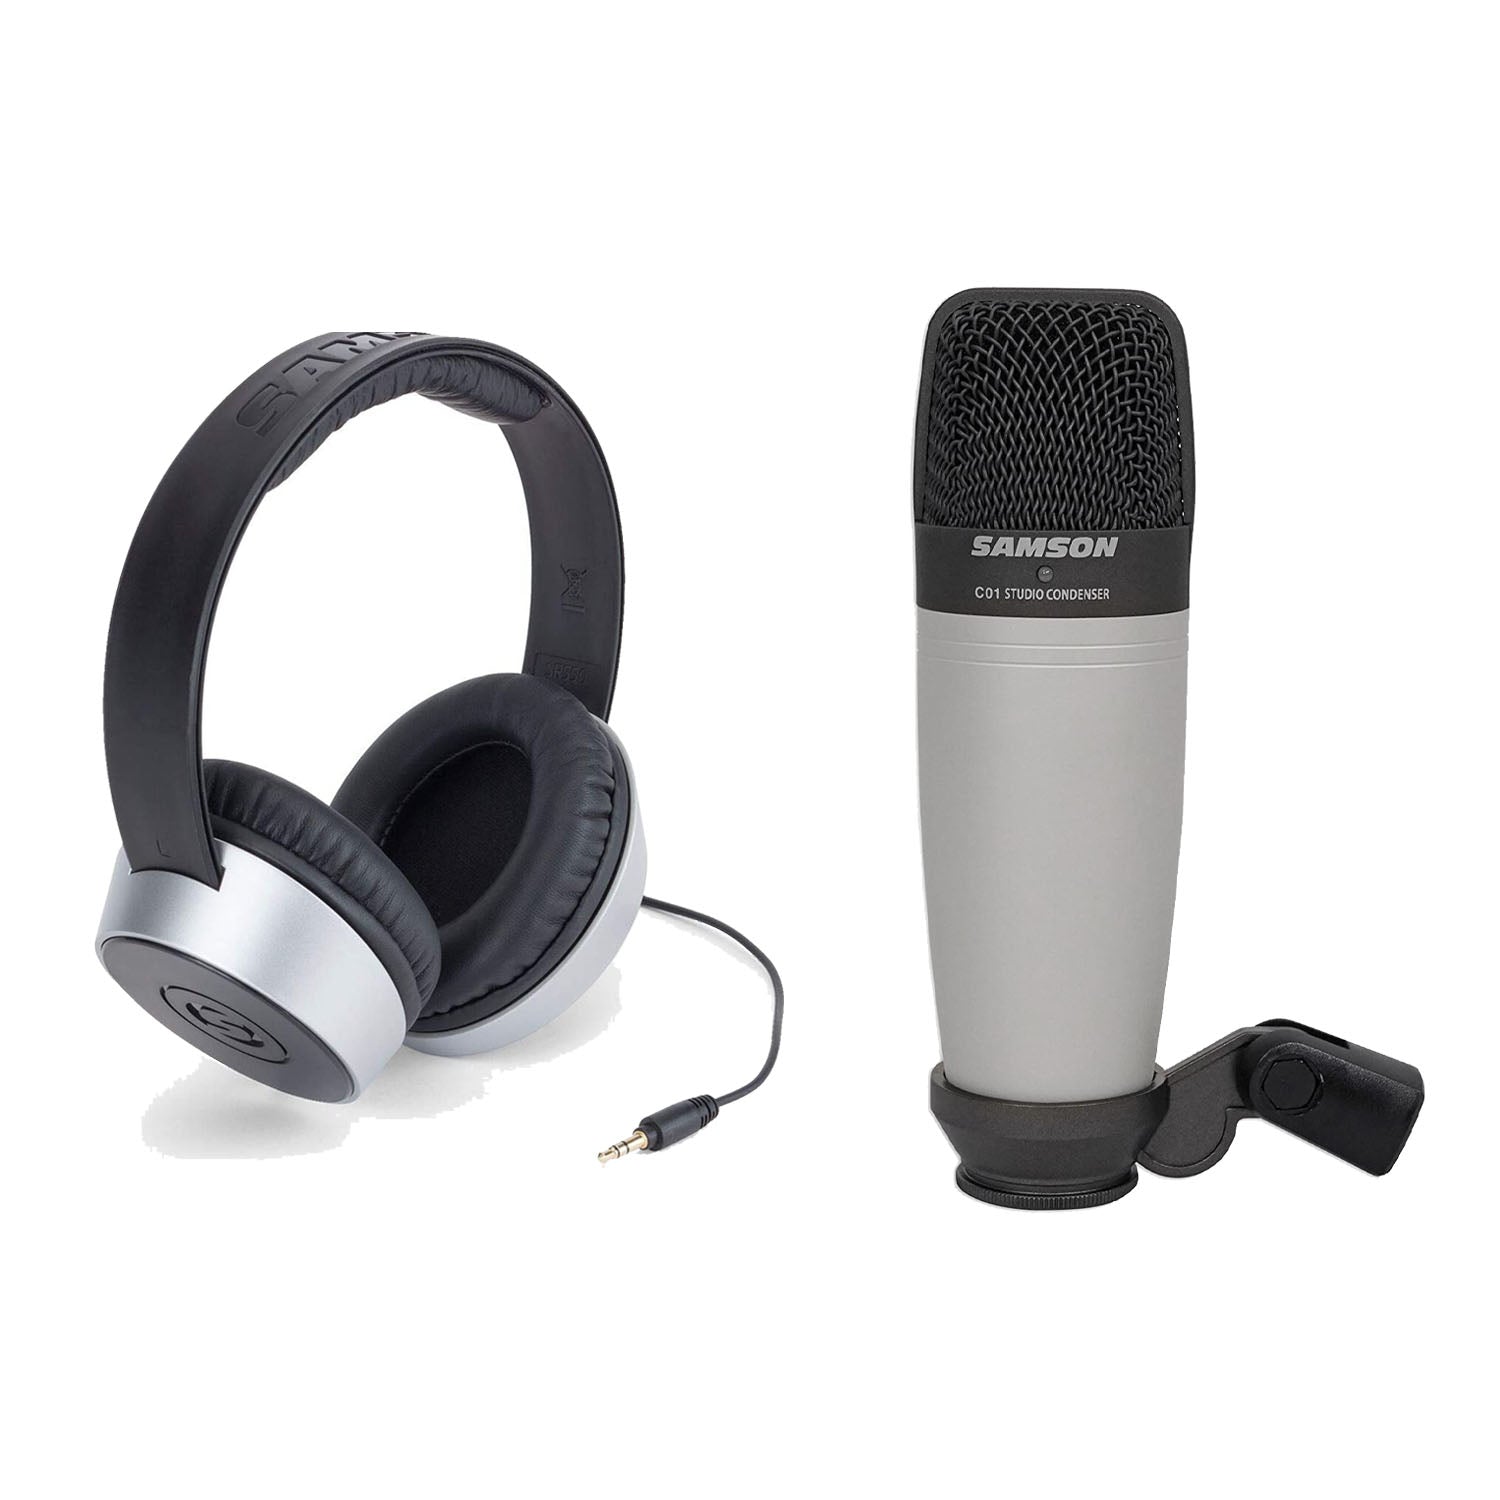 Samson C01 Large-Diaphragm Microphone and SR550 Closed Back Headphones Bundle - Pro-Distributing